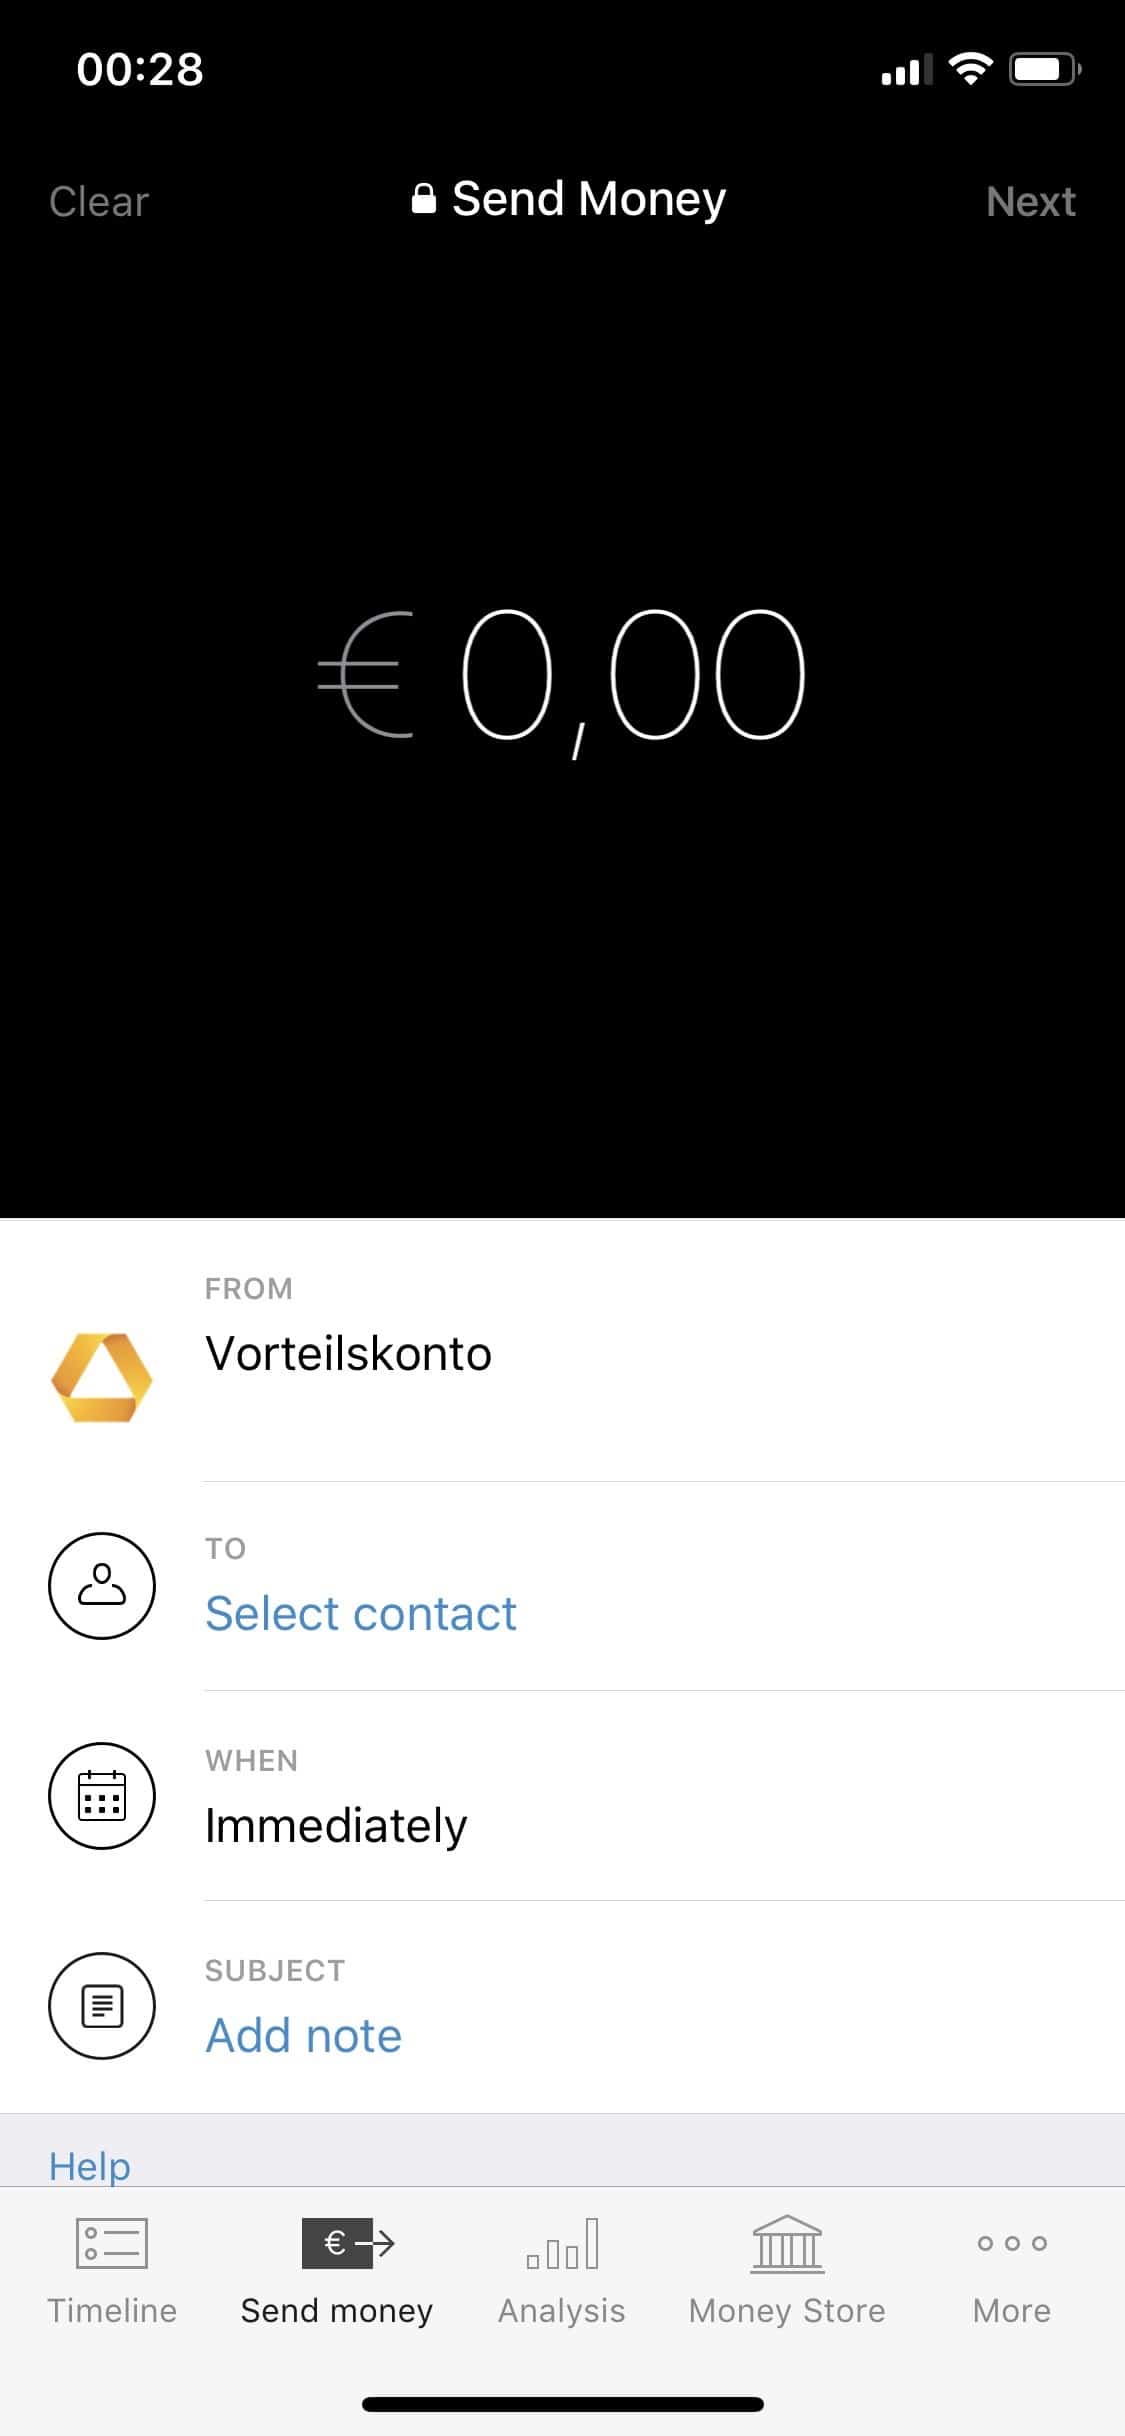 Numbrs - iPhone - iOS-App - Send Money - Geld senden